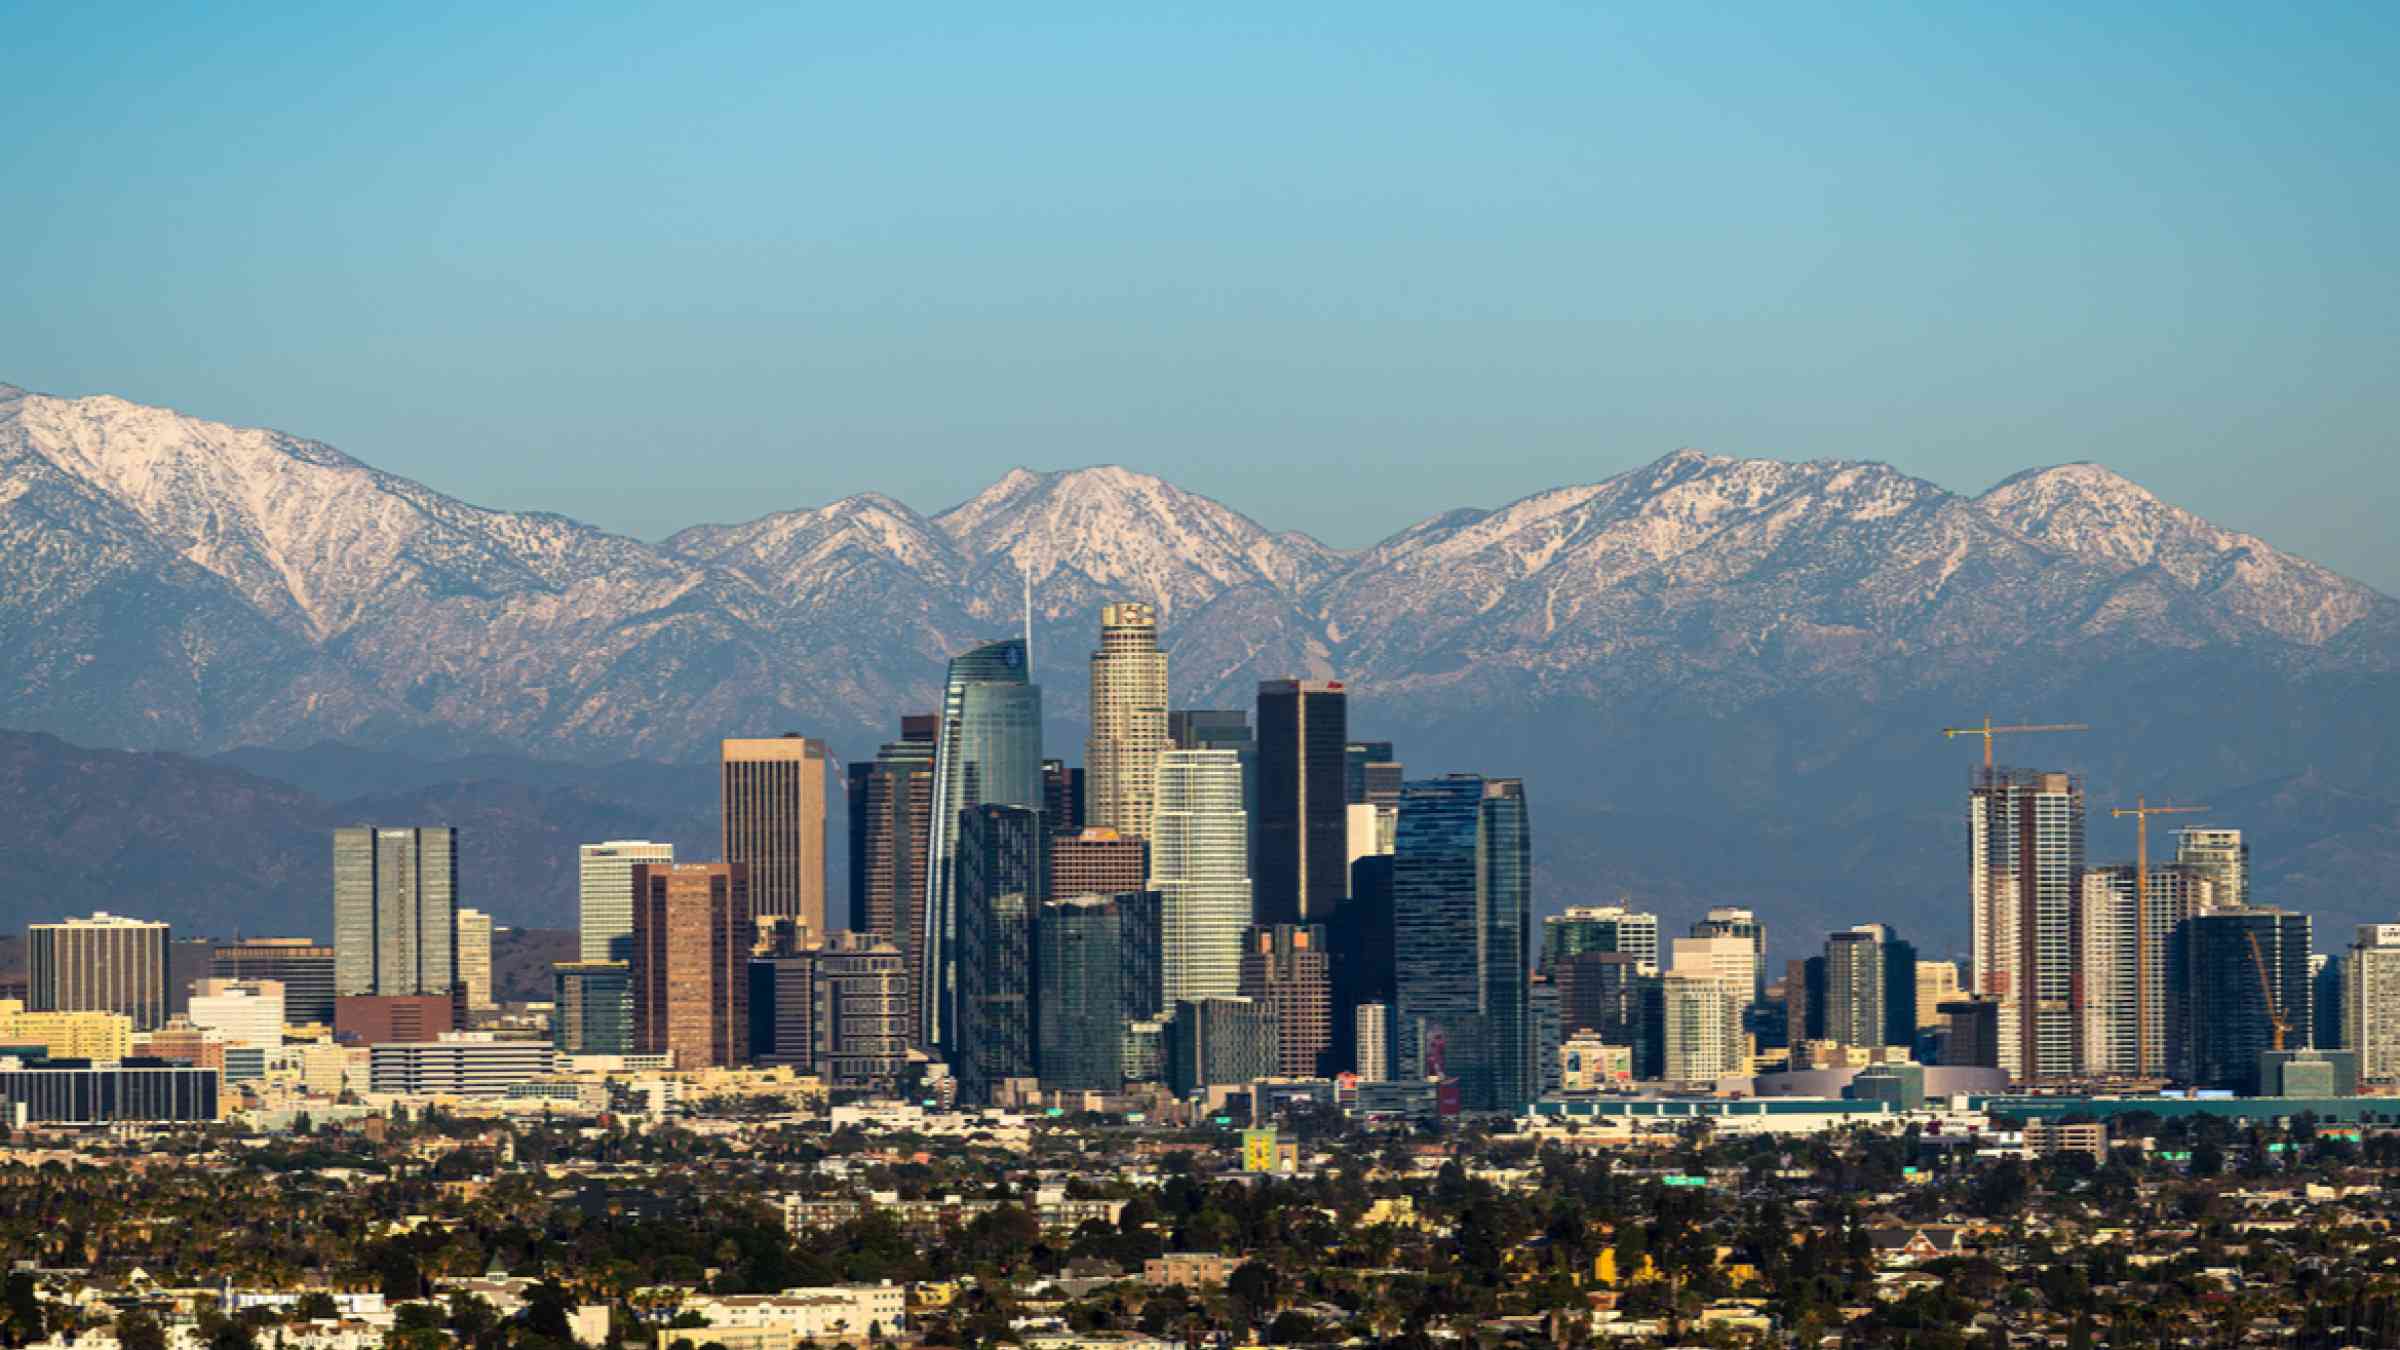 Skyline of downtown Los Angeles, California